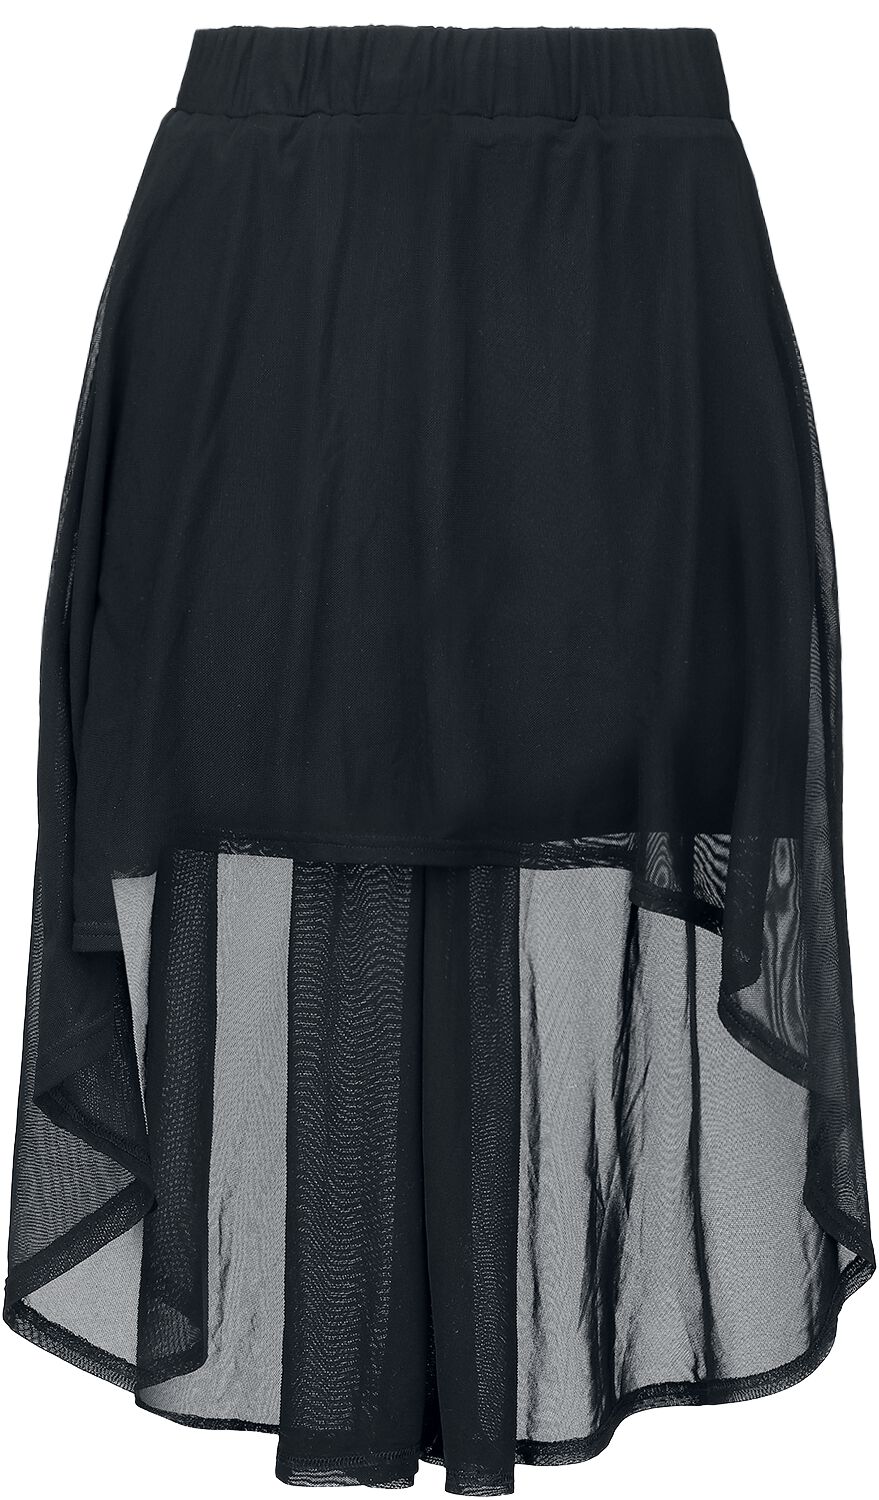 Image of Minigonna Gothic di Gothicana by EMP - Skirt with transparent details - L a XXL - Donna - nero